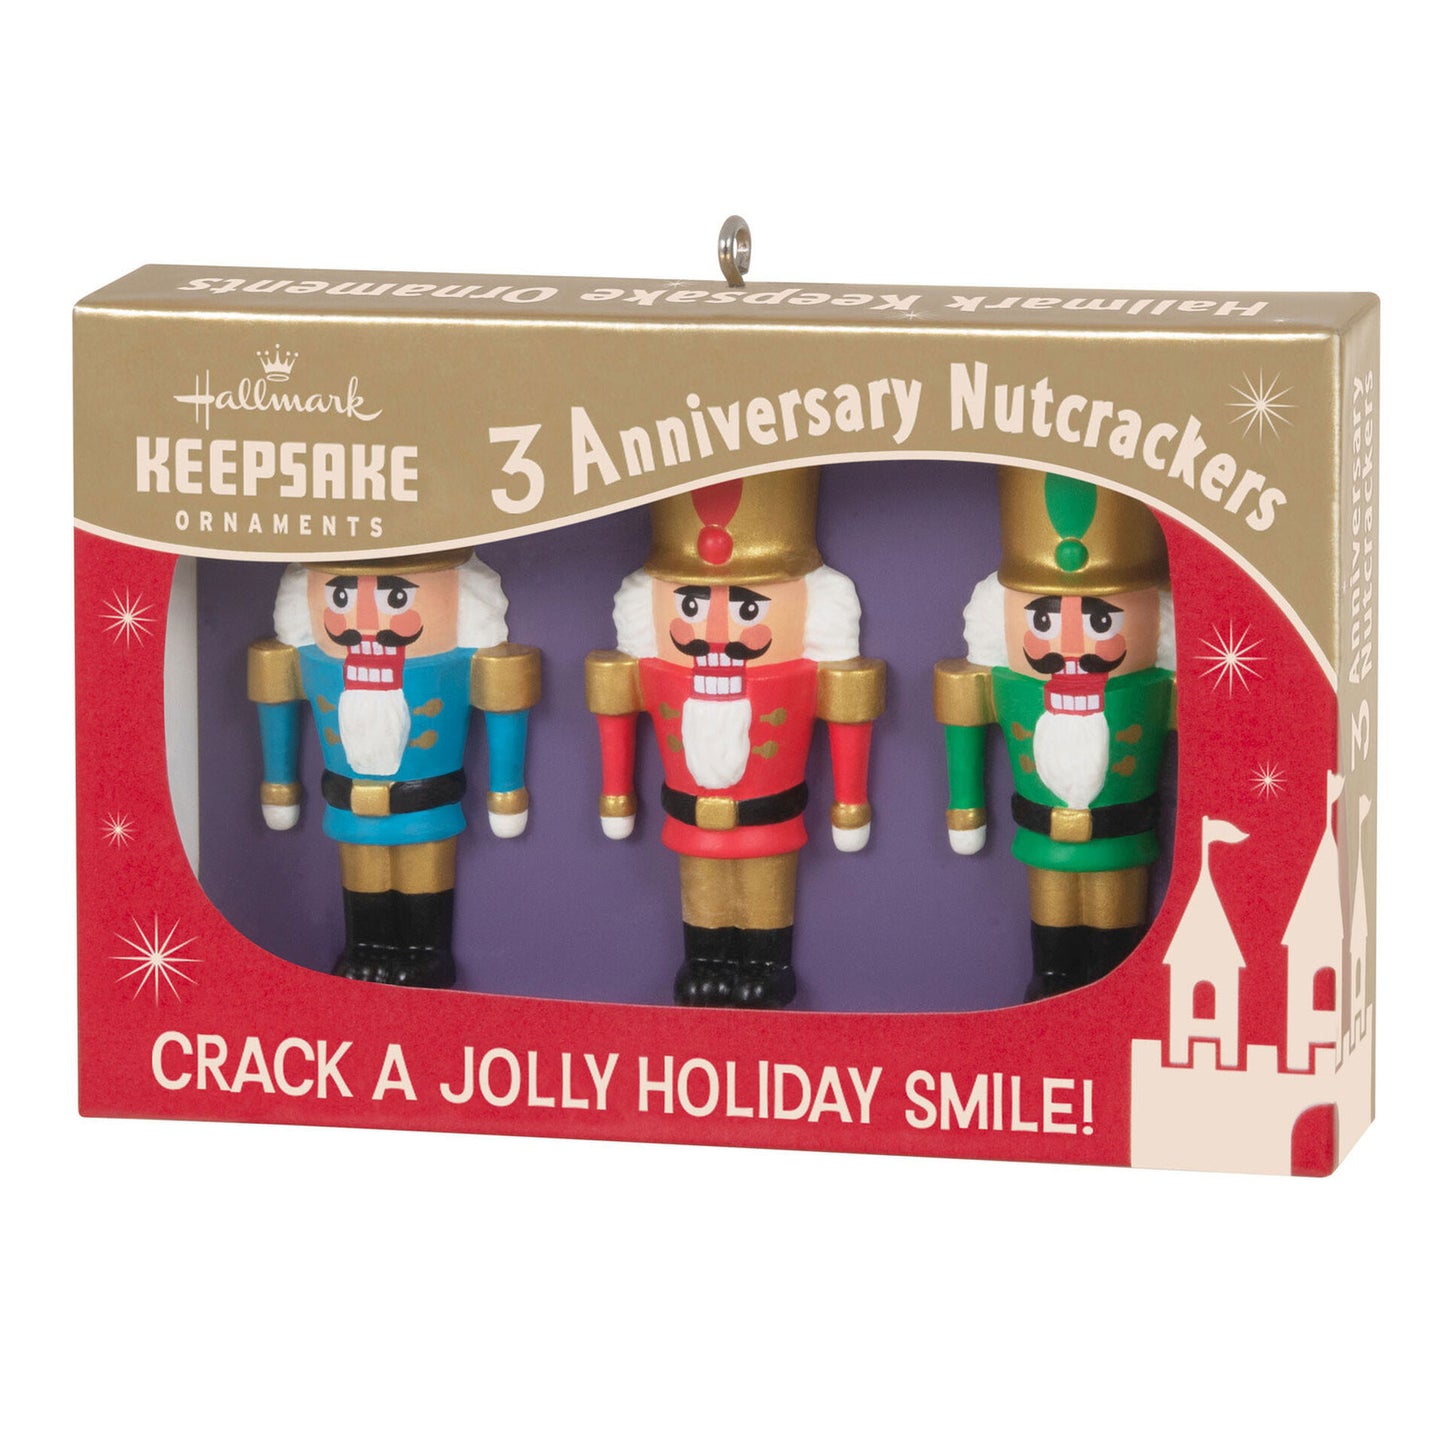 A Christmas ornament of a vintage Hallmark box of three nutcrackers.